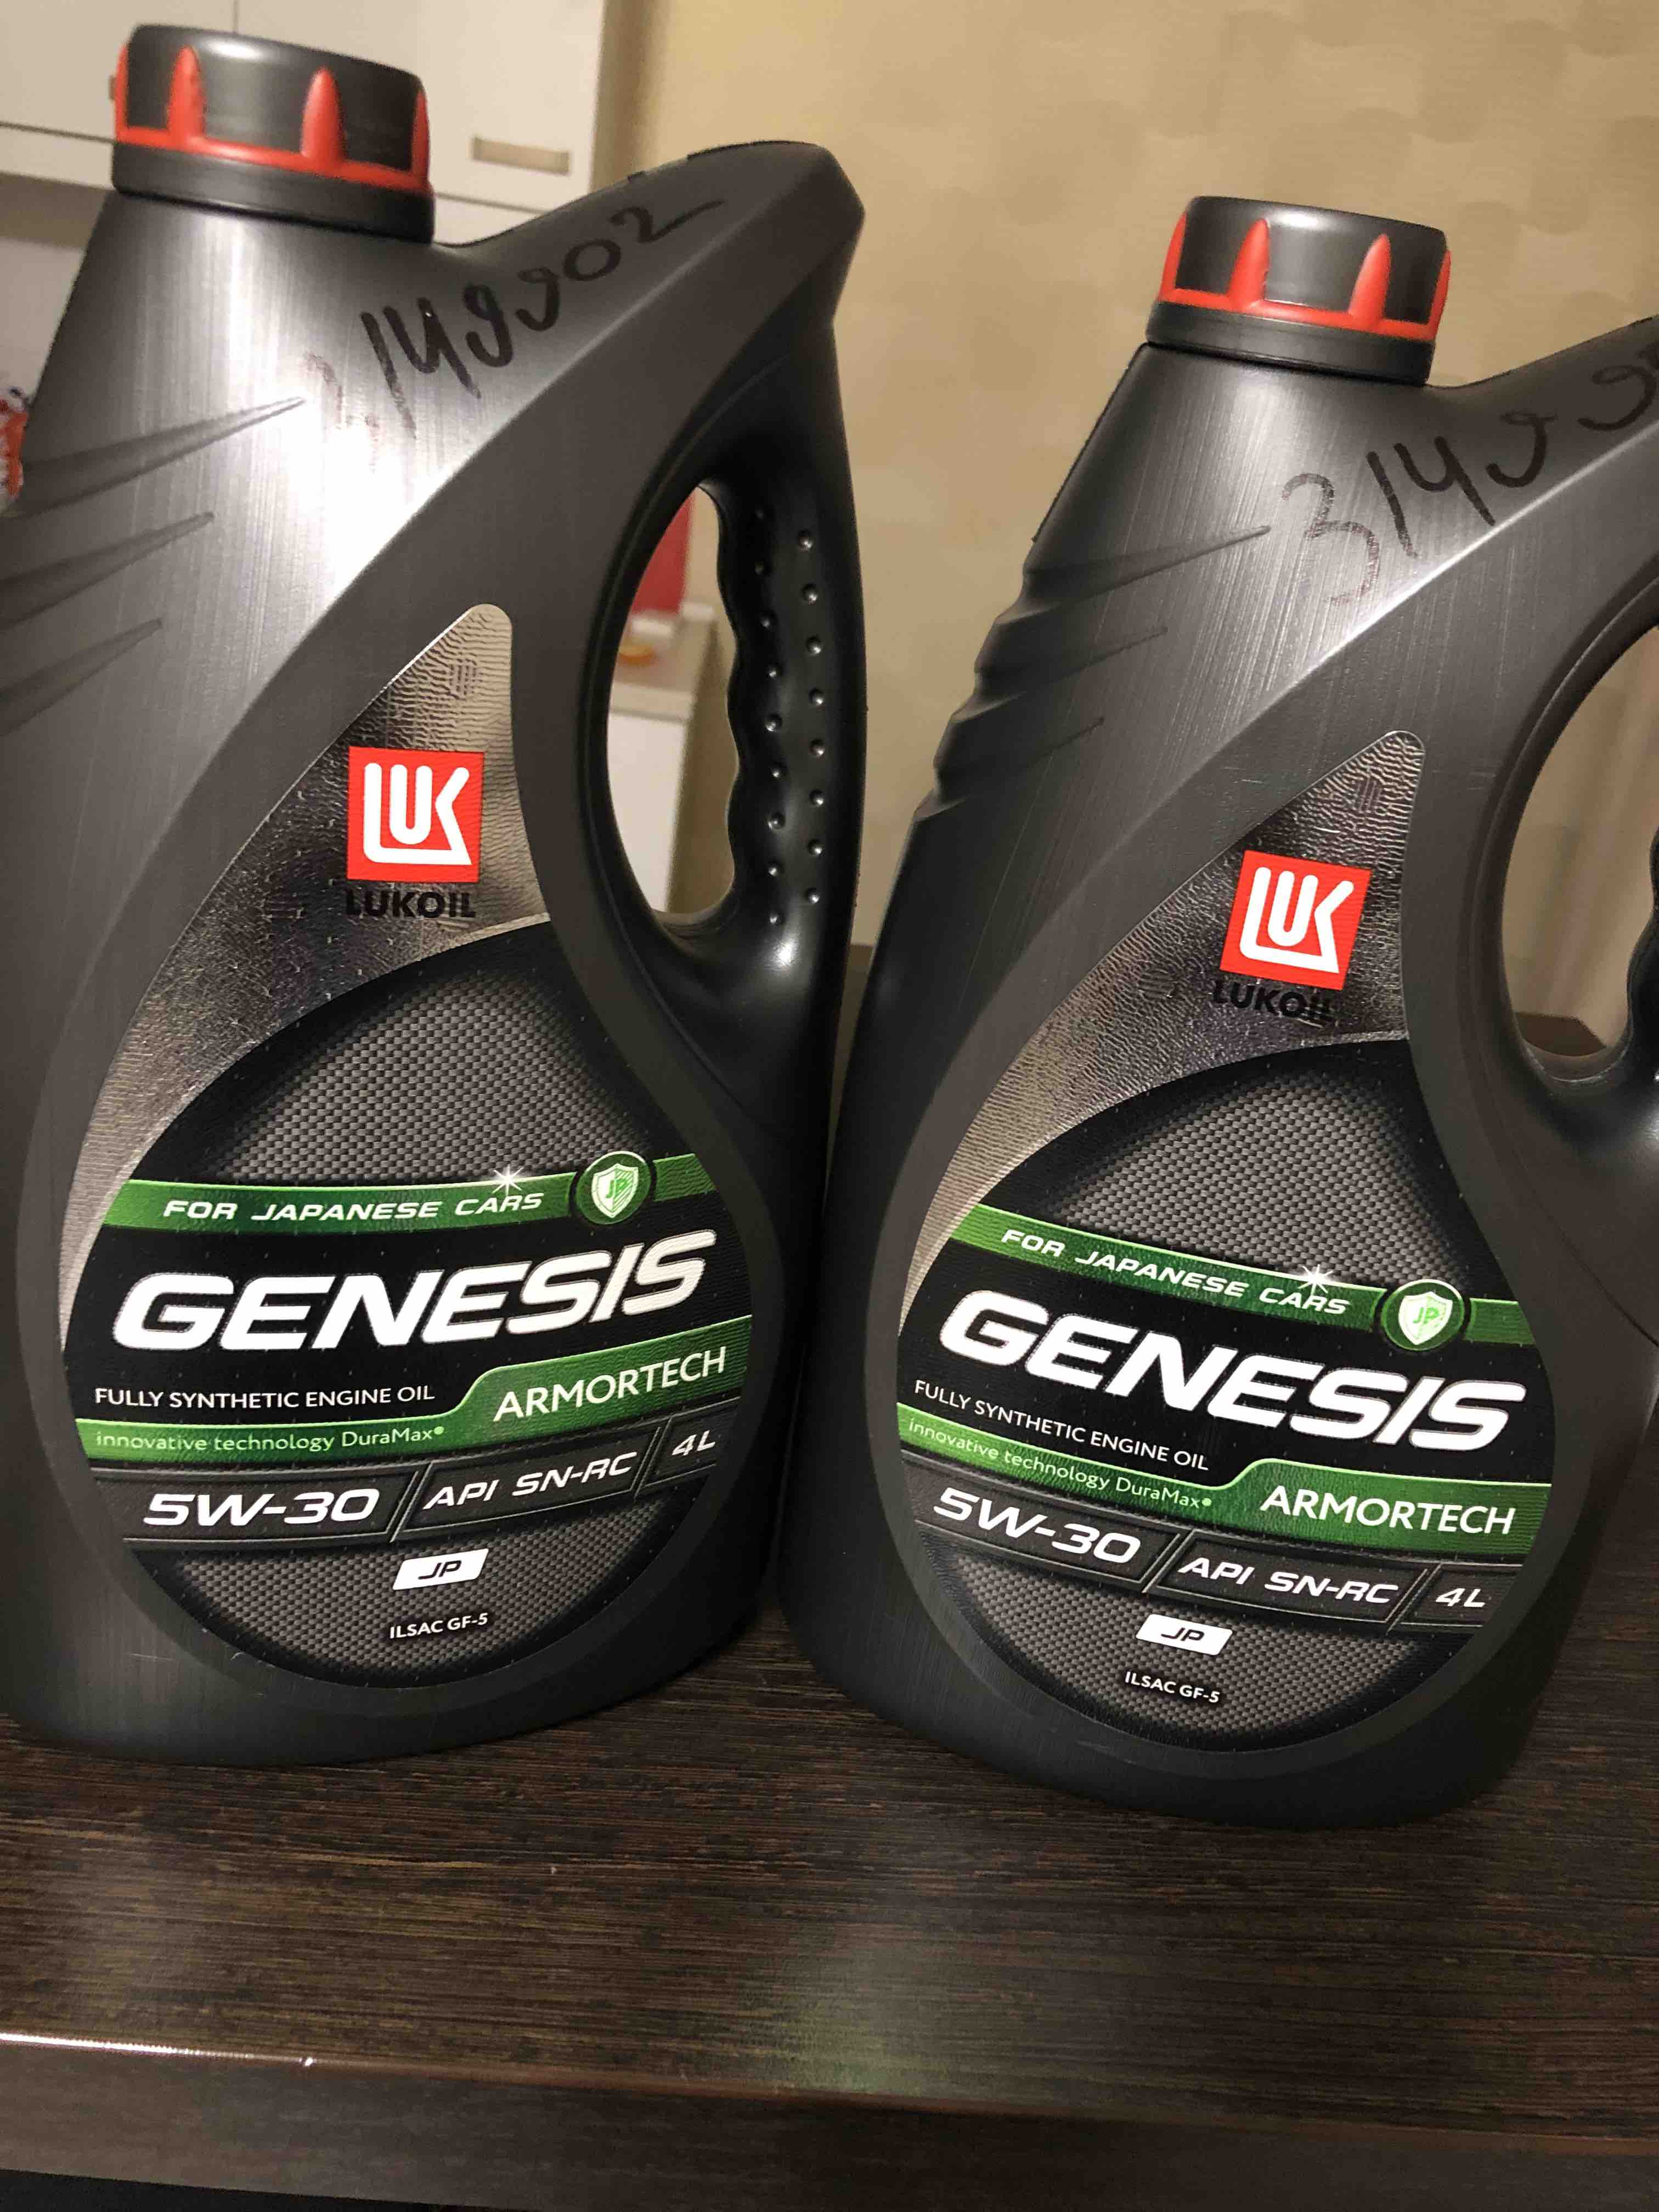 Lukoil Genesis GK. Масло лукойл генезис отзывы владельцев